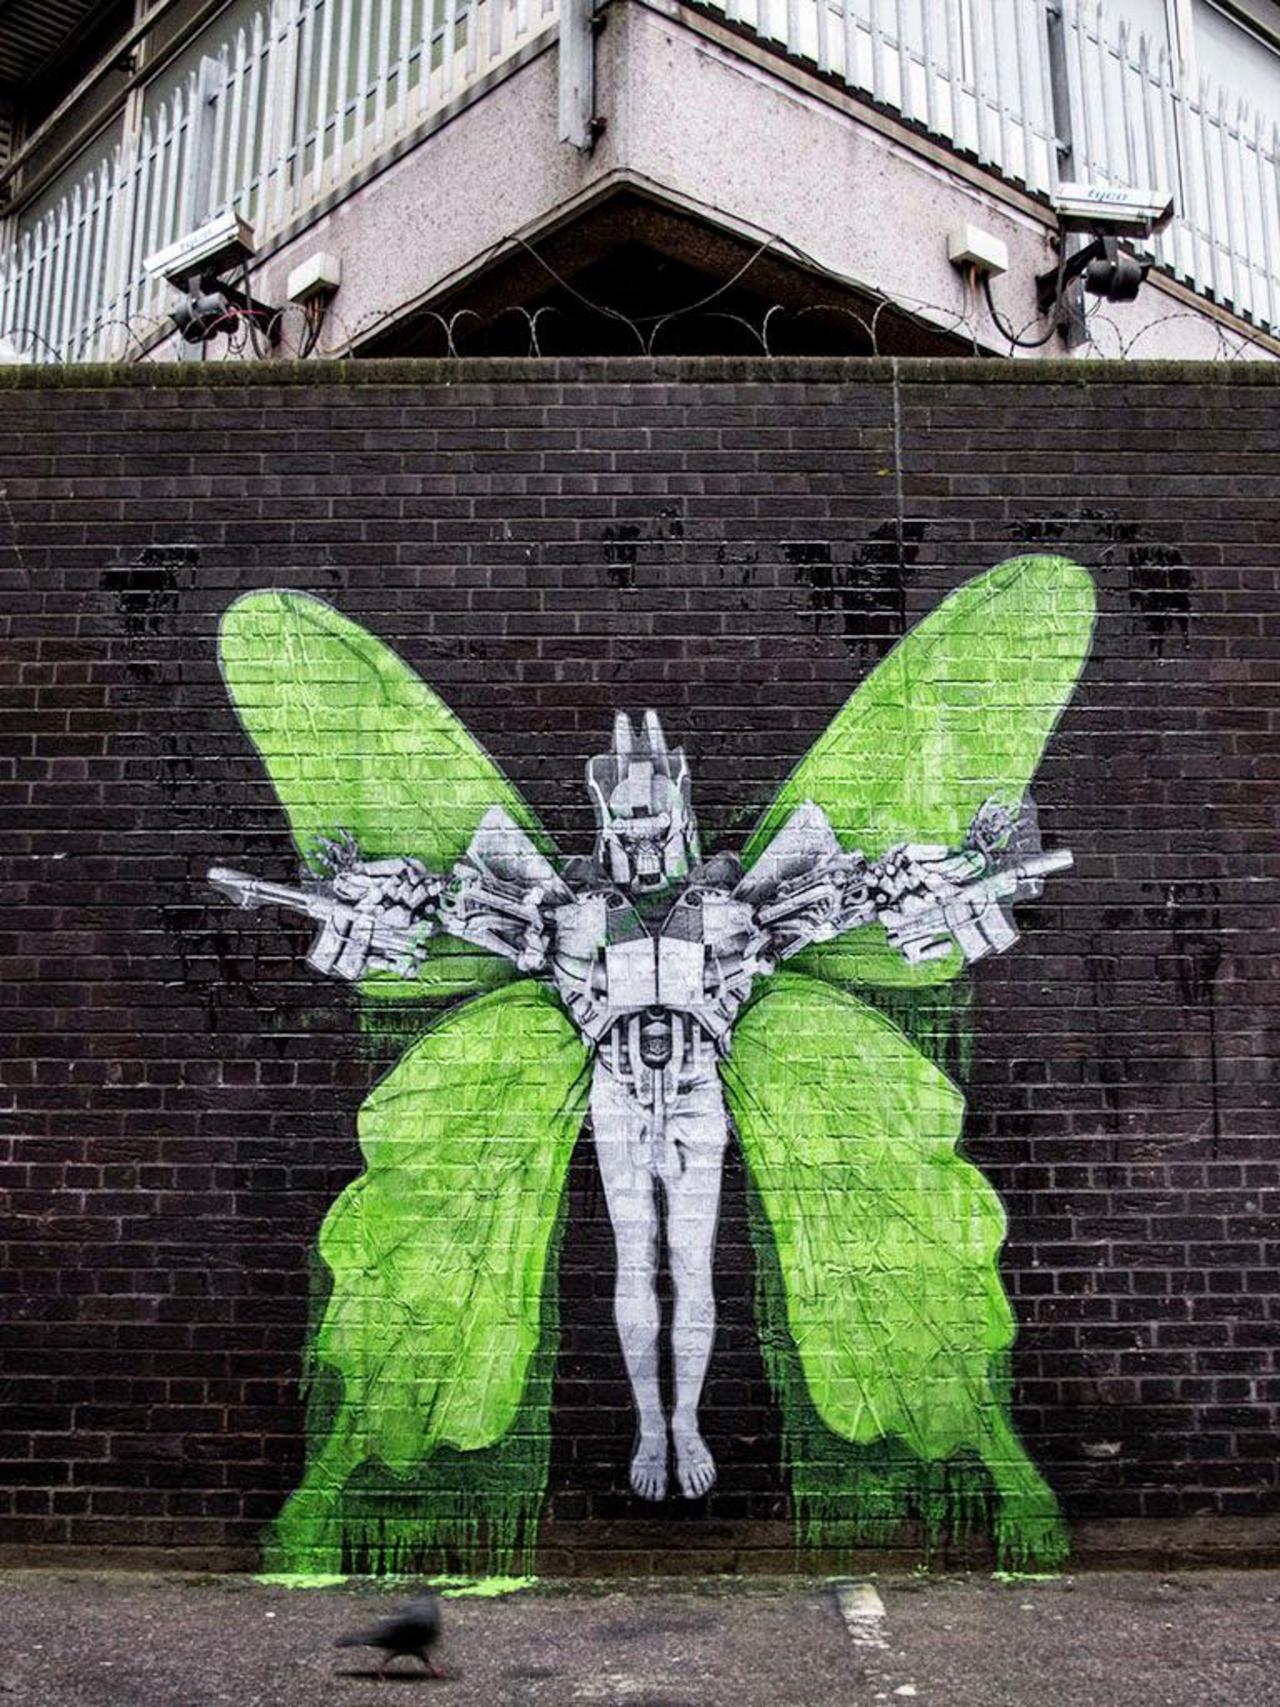 Ludo - #London, #UK

#streetart #urbanart #mural #art #graffiti http://t.co/f5fVPvOBZb